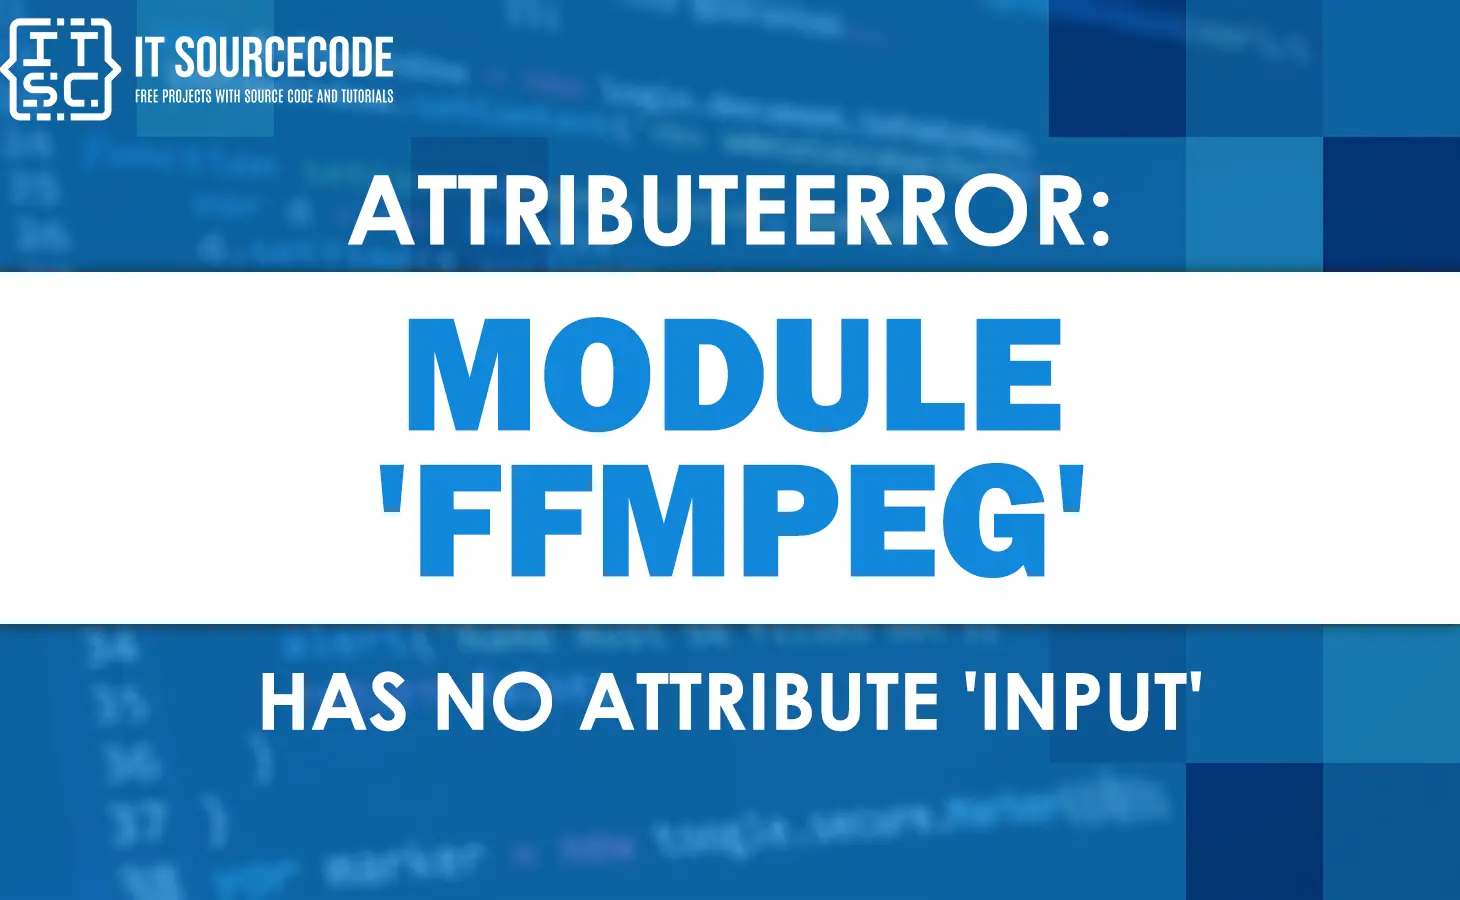 Attributeerror: module 'ffmpeg' has no attribute 'input'